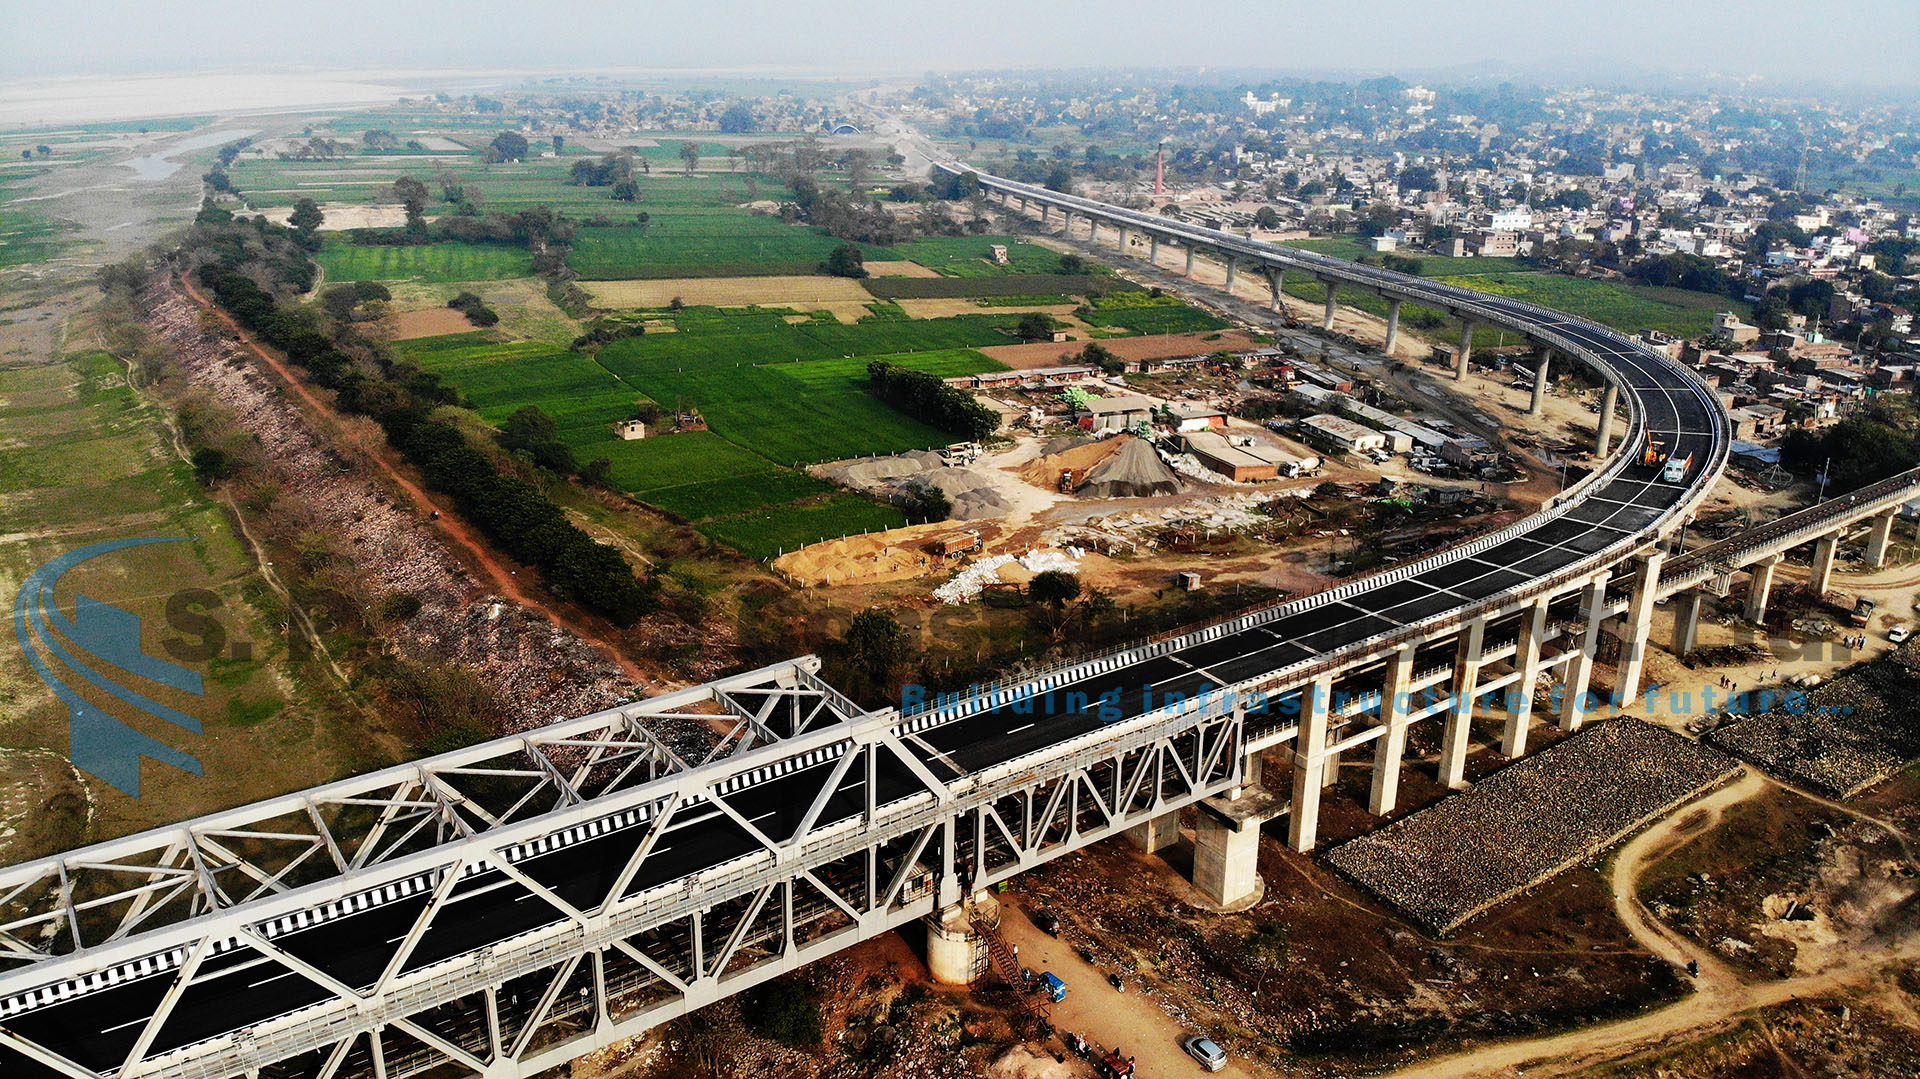 Construction of road approaches to rail cum road bridge across river Ganga at Munger Ghat Near Munger, Bihar